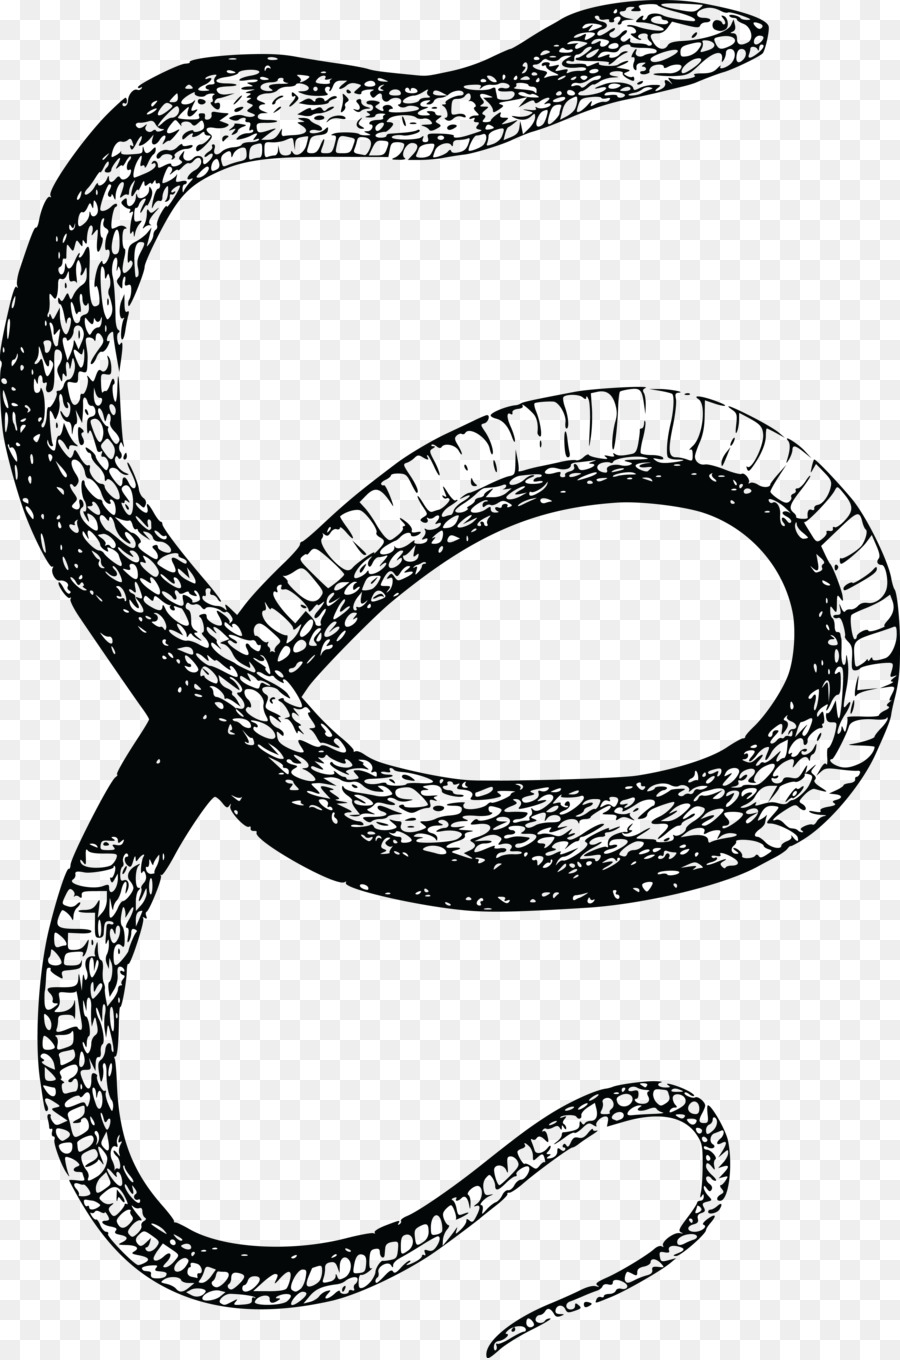 Snake Reptile Vertebrate Drawing Clip art - snake png download - 4000*6034 - Free Transparent Snake png Download.